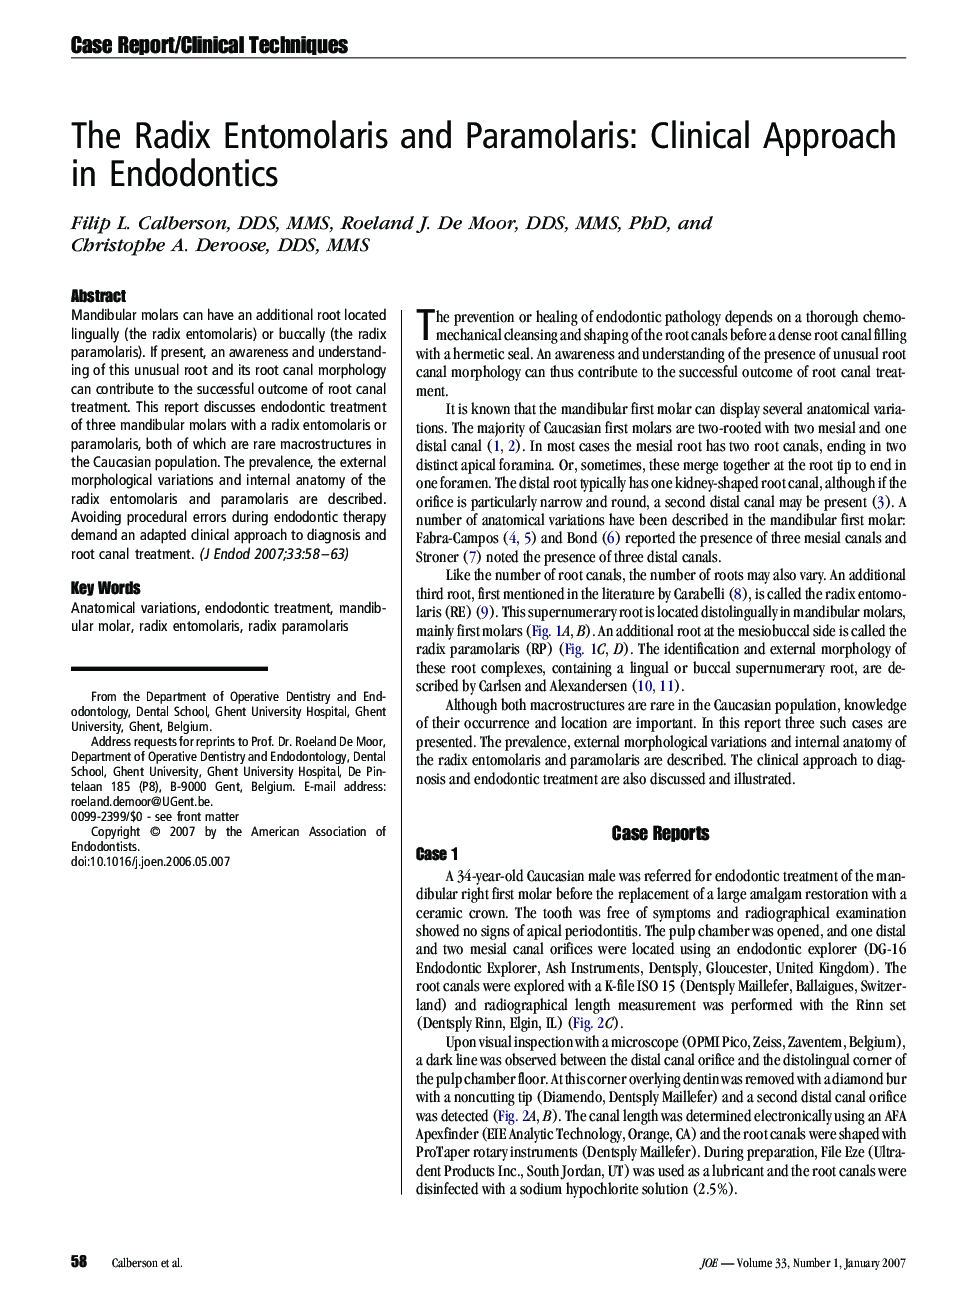 The Radix Entomolaris and Paramolaris: Clinical Approach in Endodontics